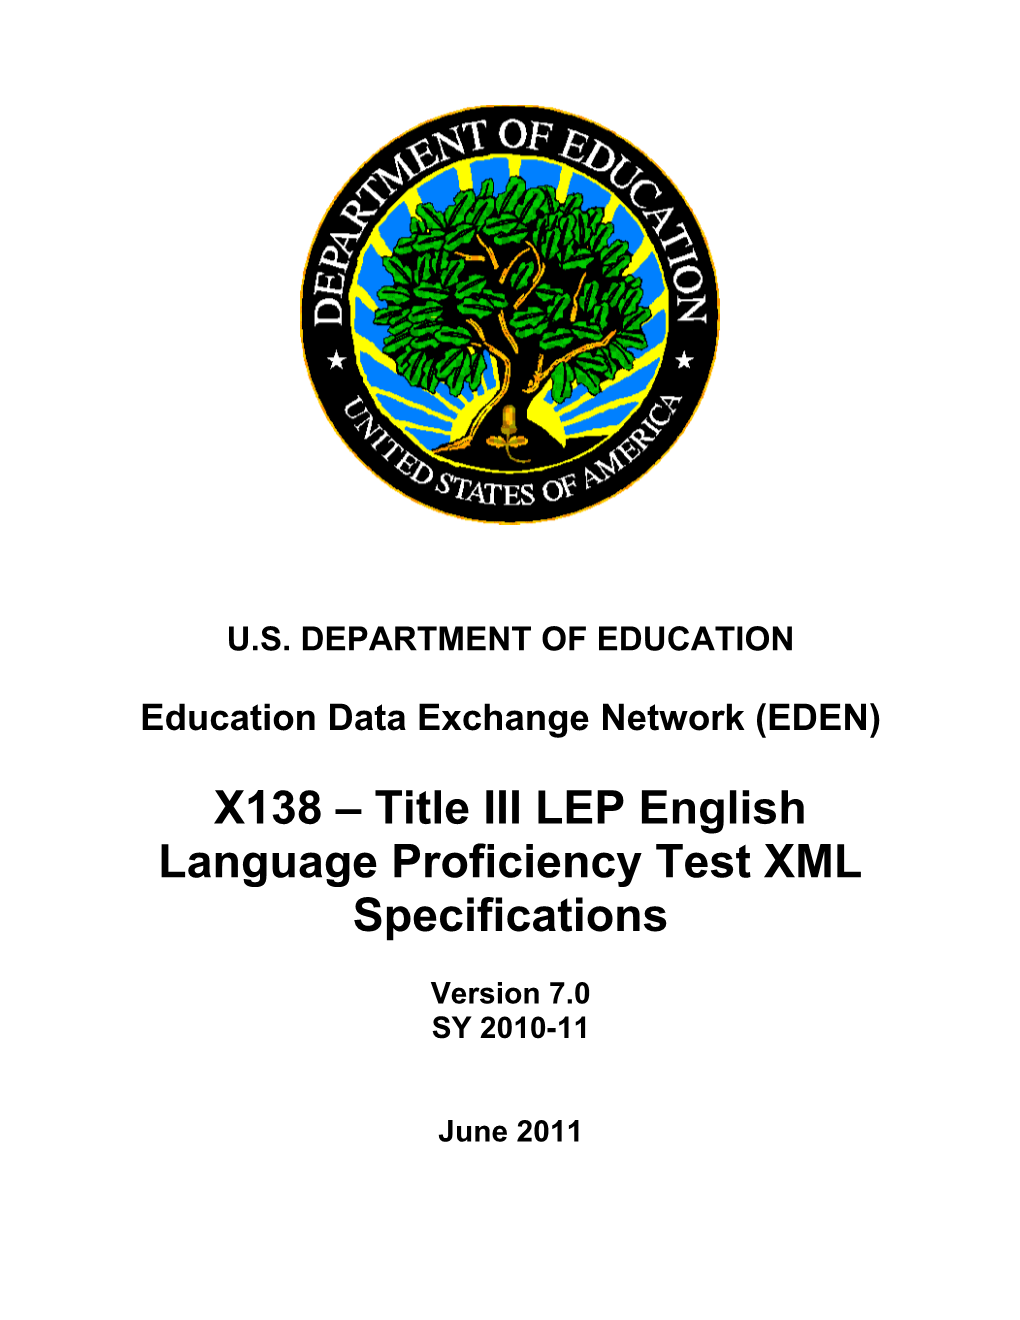 Title III LEP English Language Proficiency Test XML Specifications